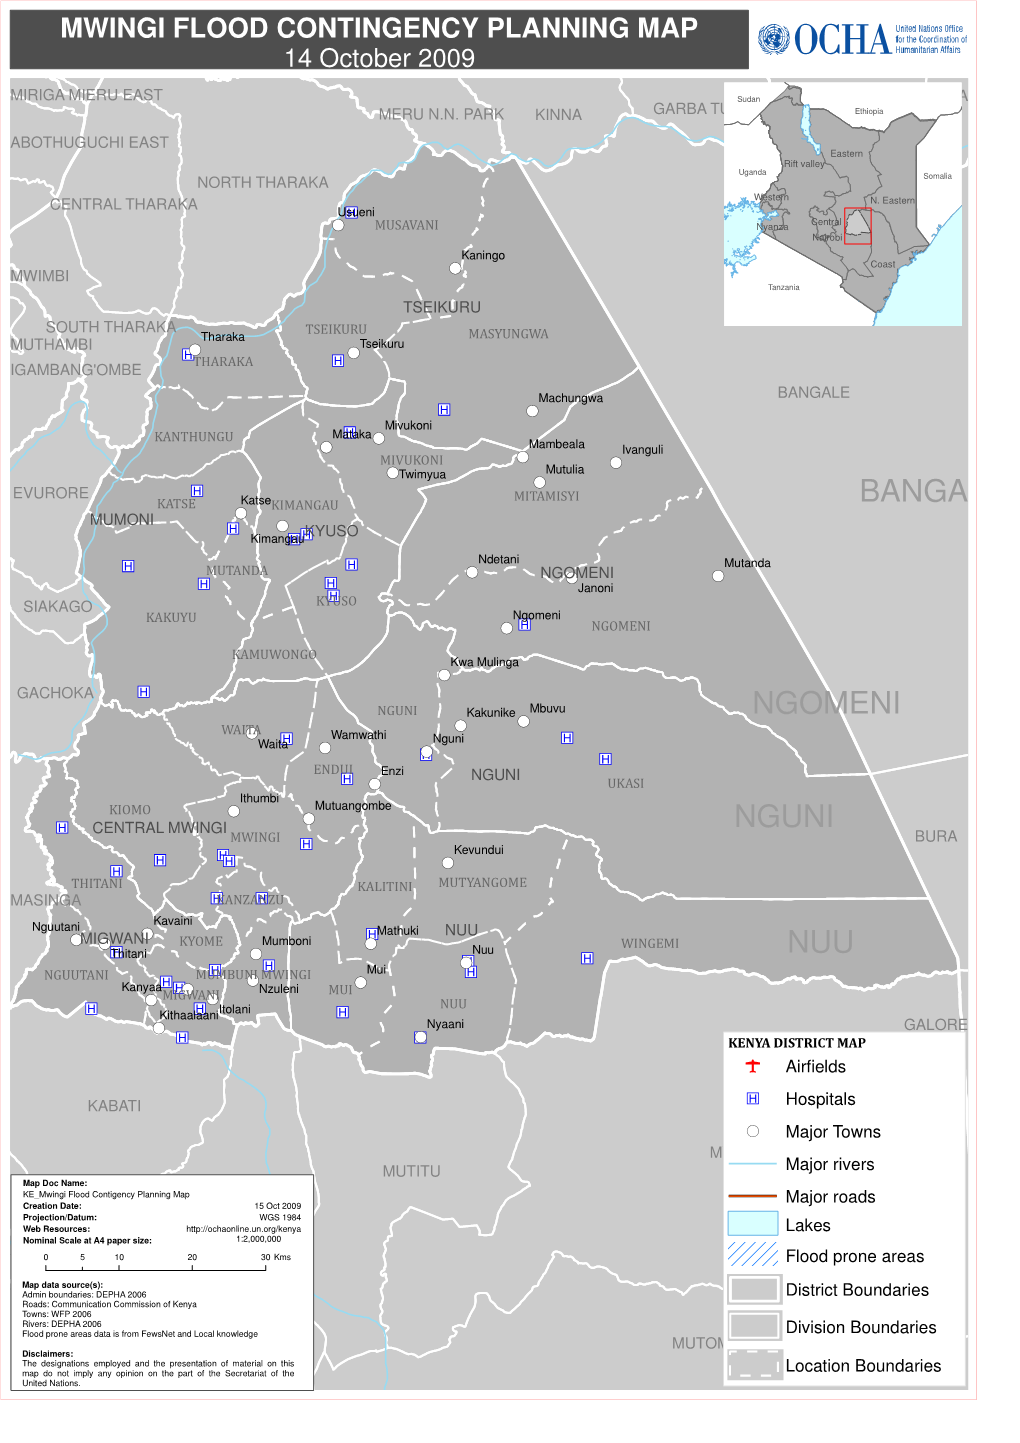 MWINGI FLOOD CONTINGENCY PLANNING MAP 14 October 2009